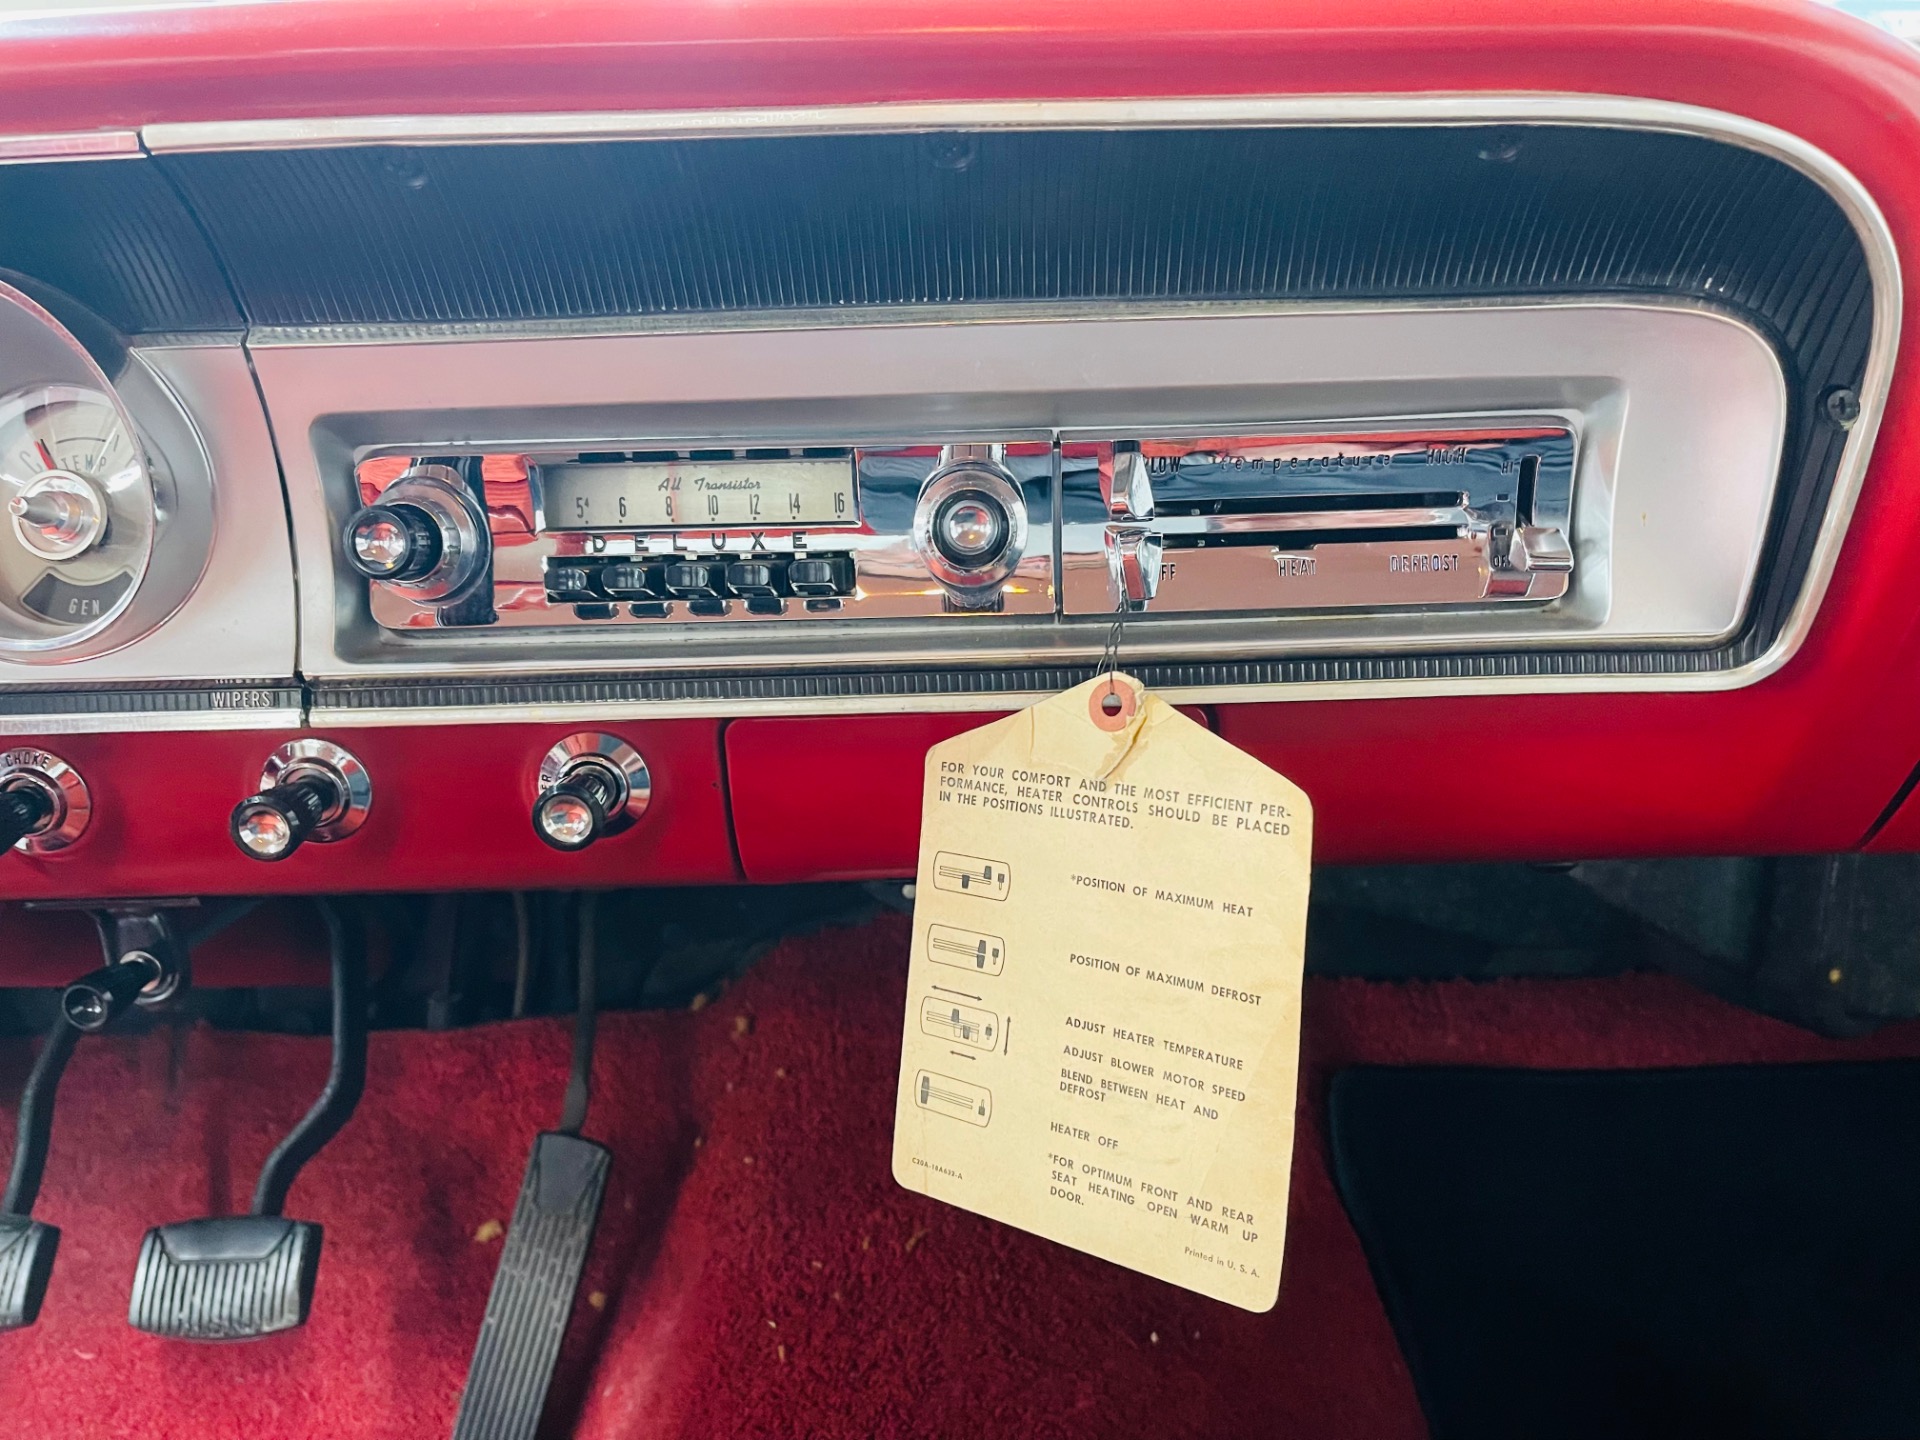 Used 1964 Ford Fairlane - 500 4 DOOR SEDAN - LIKE NEW CONDITION - | Mundelein, IL